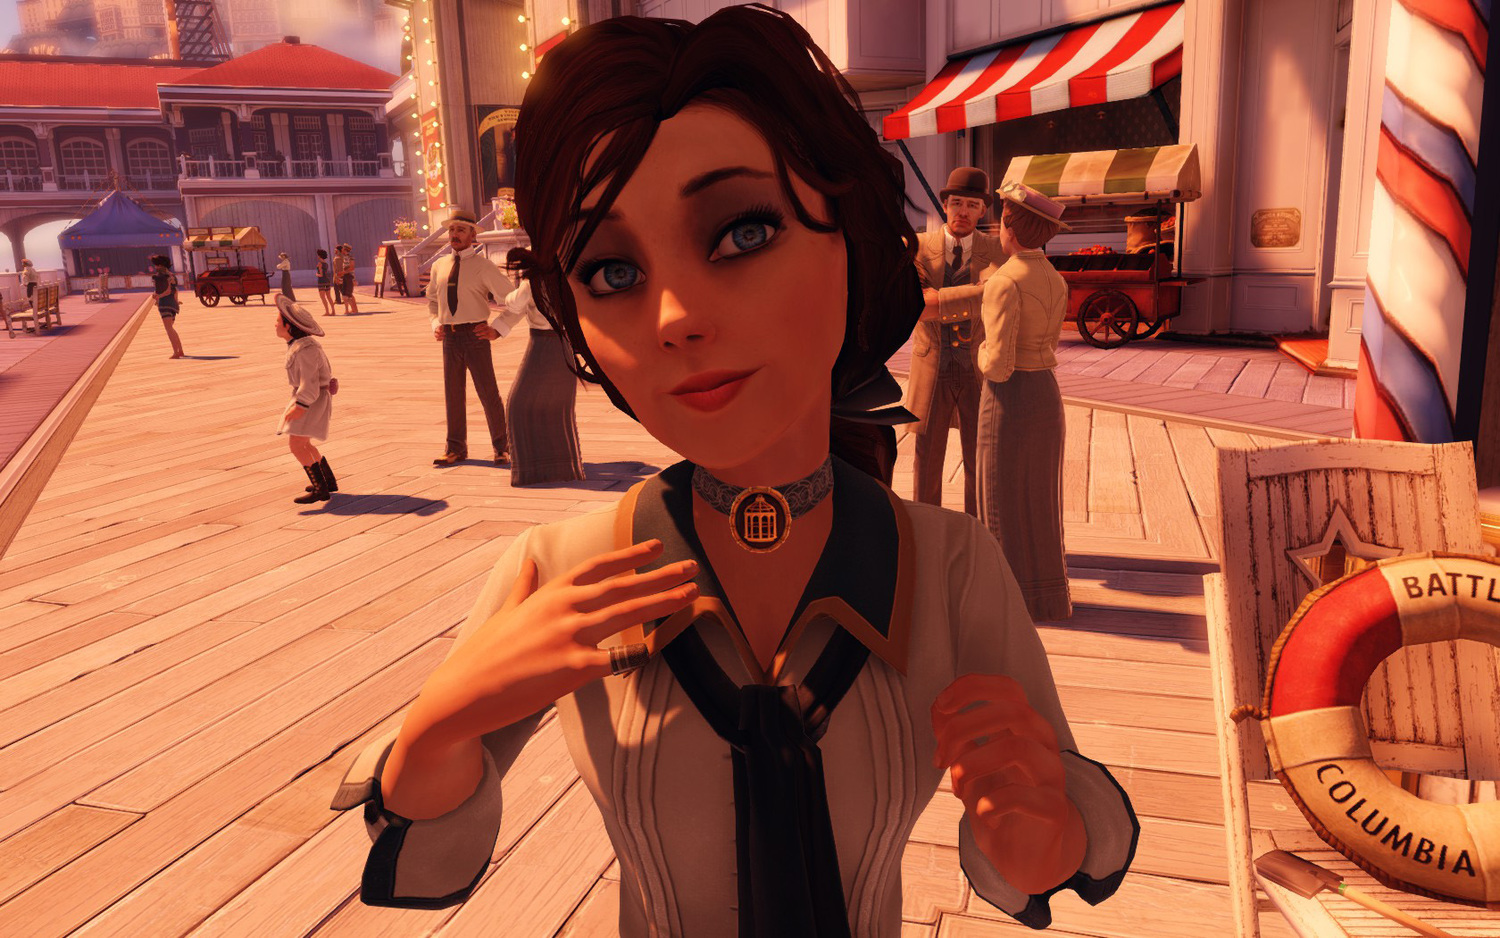 Animating BioShock Infinite's Elizabeth to foster emotional